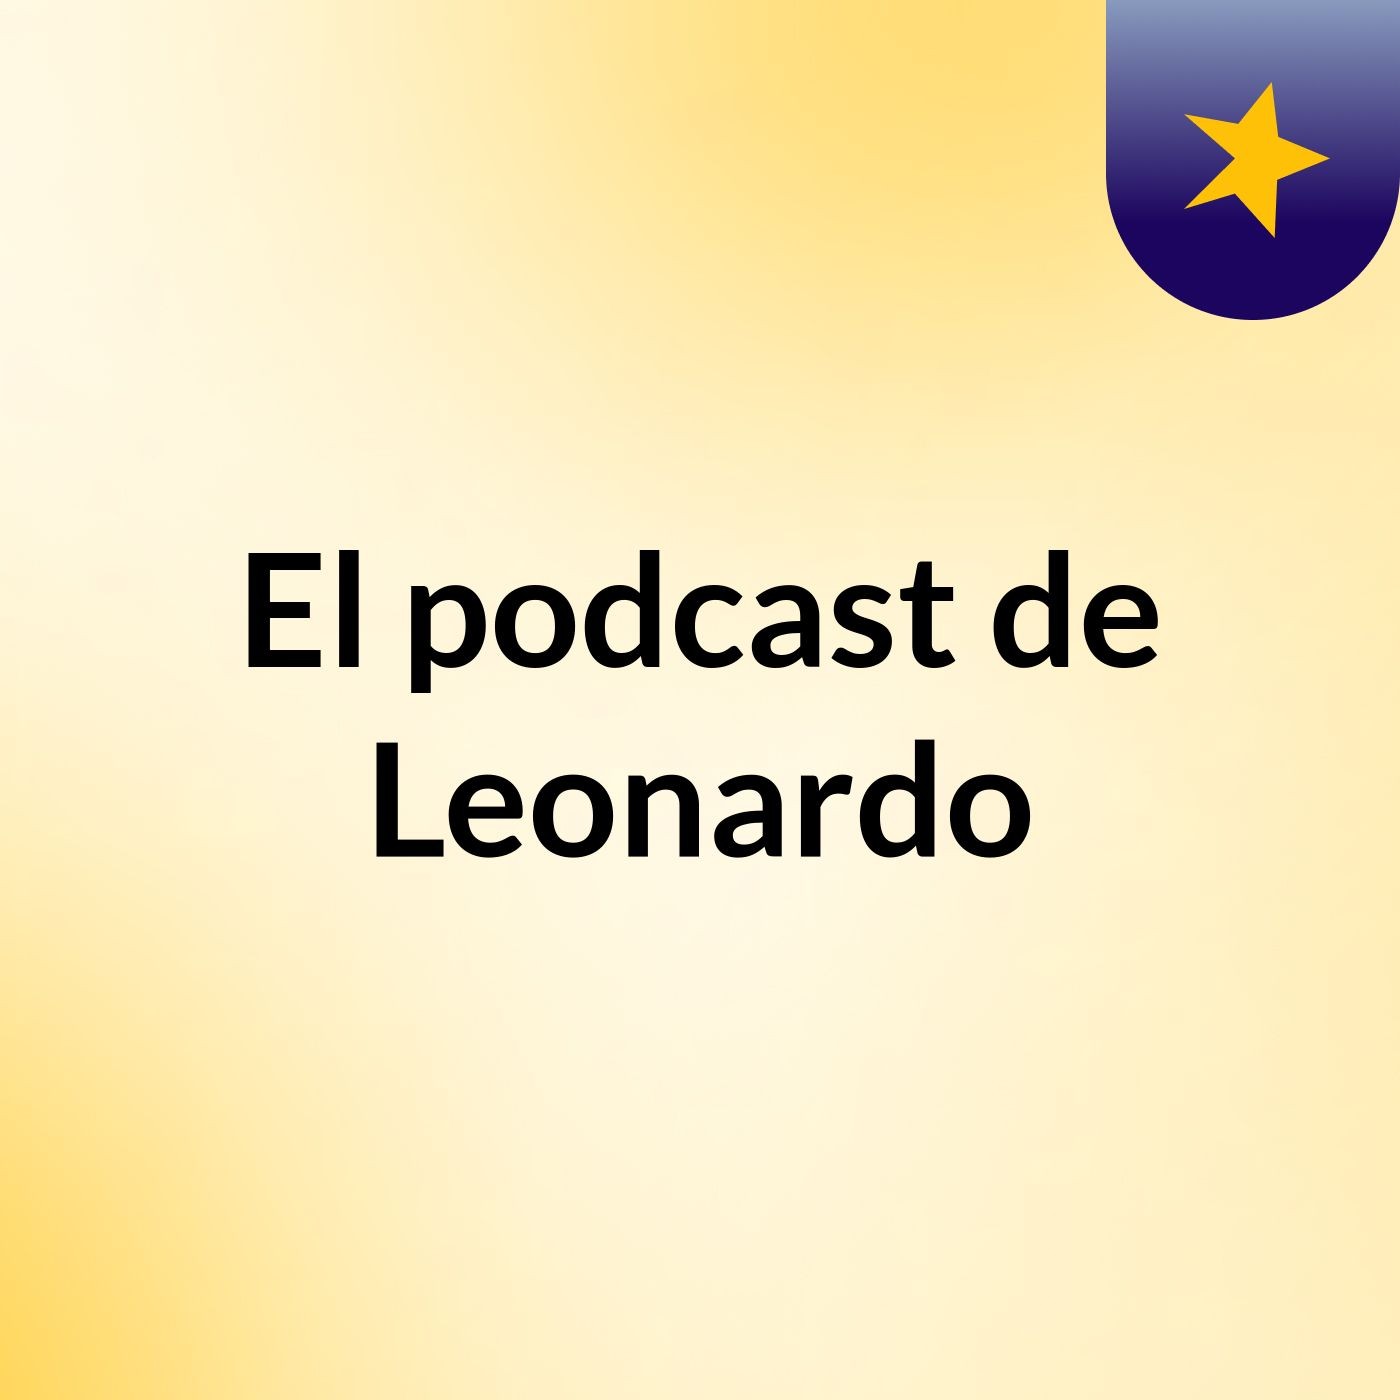 El podcast de Leonardo